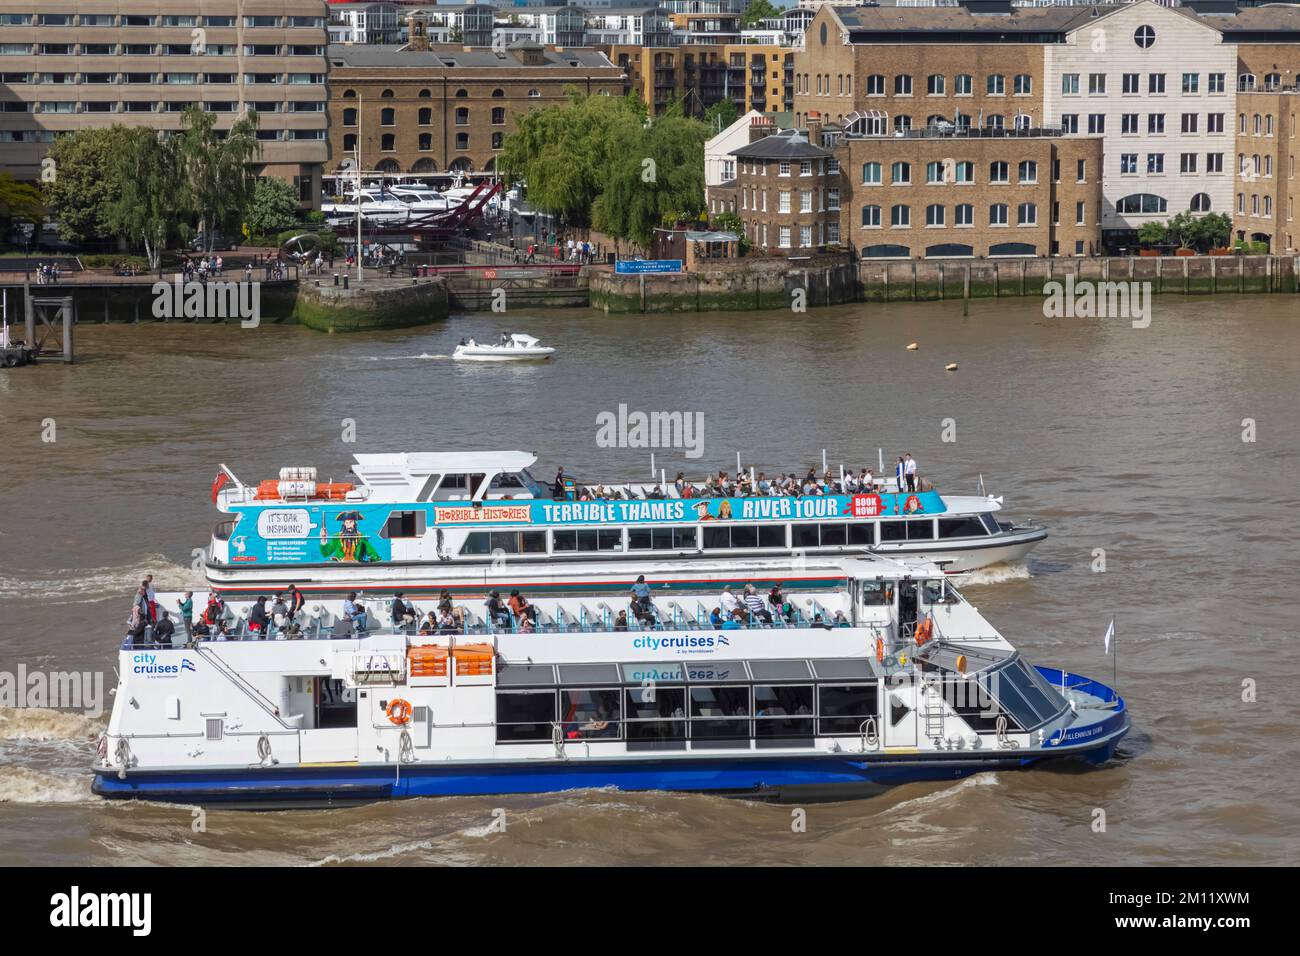 Touristenkreuzboote auf der Themse, London, England Stockfoto